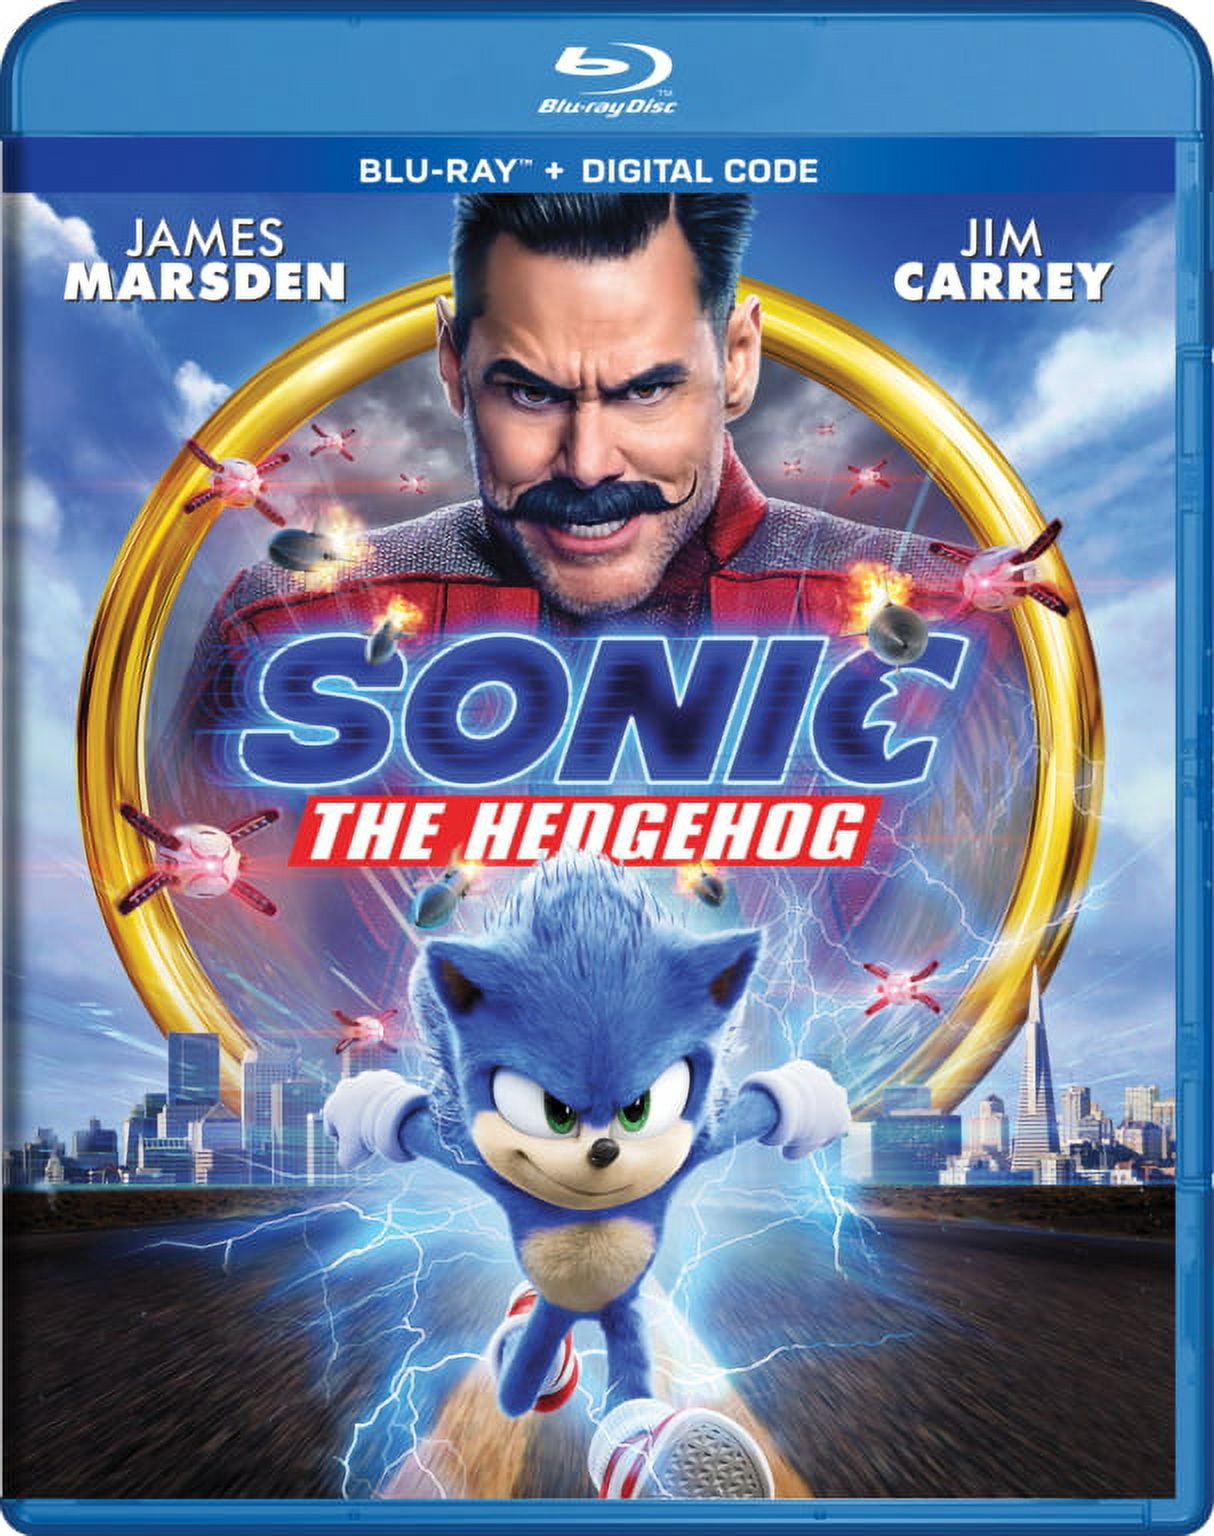 Sonic the Hedgehog 2006 cover, Movie edition by DanielVieiraBr2020